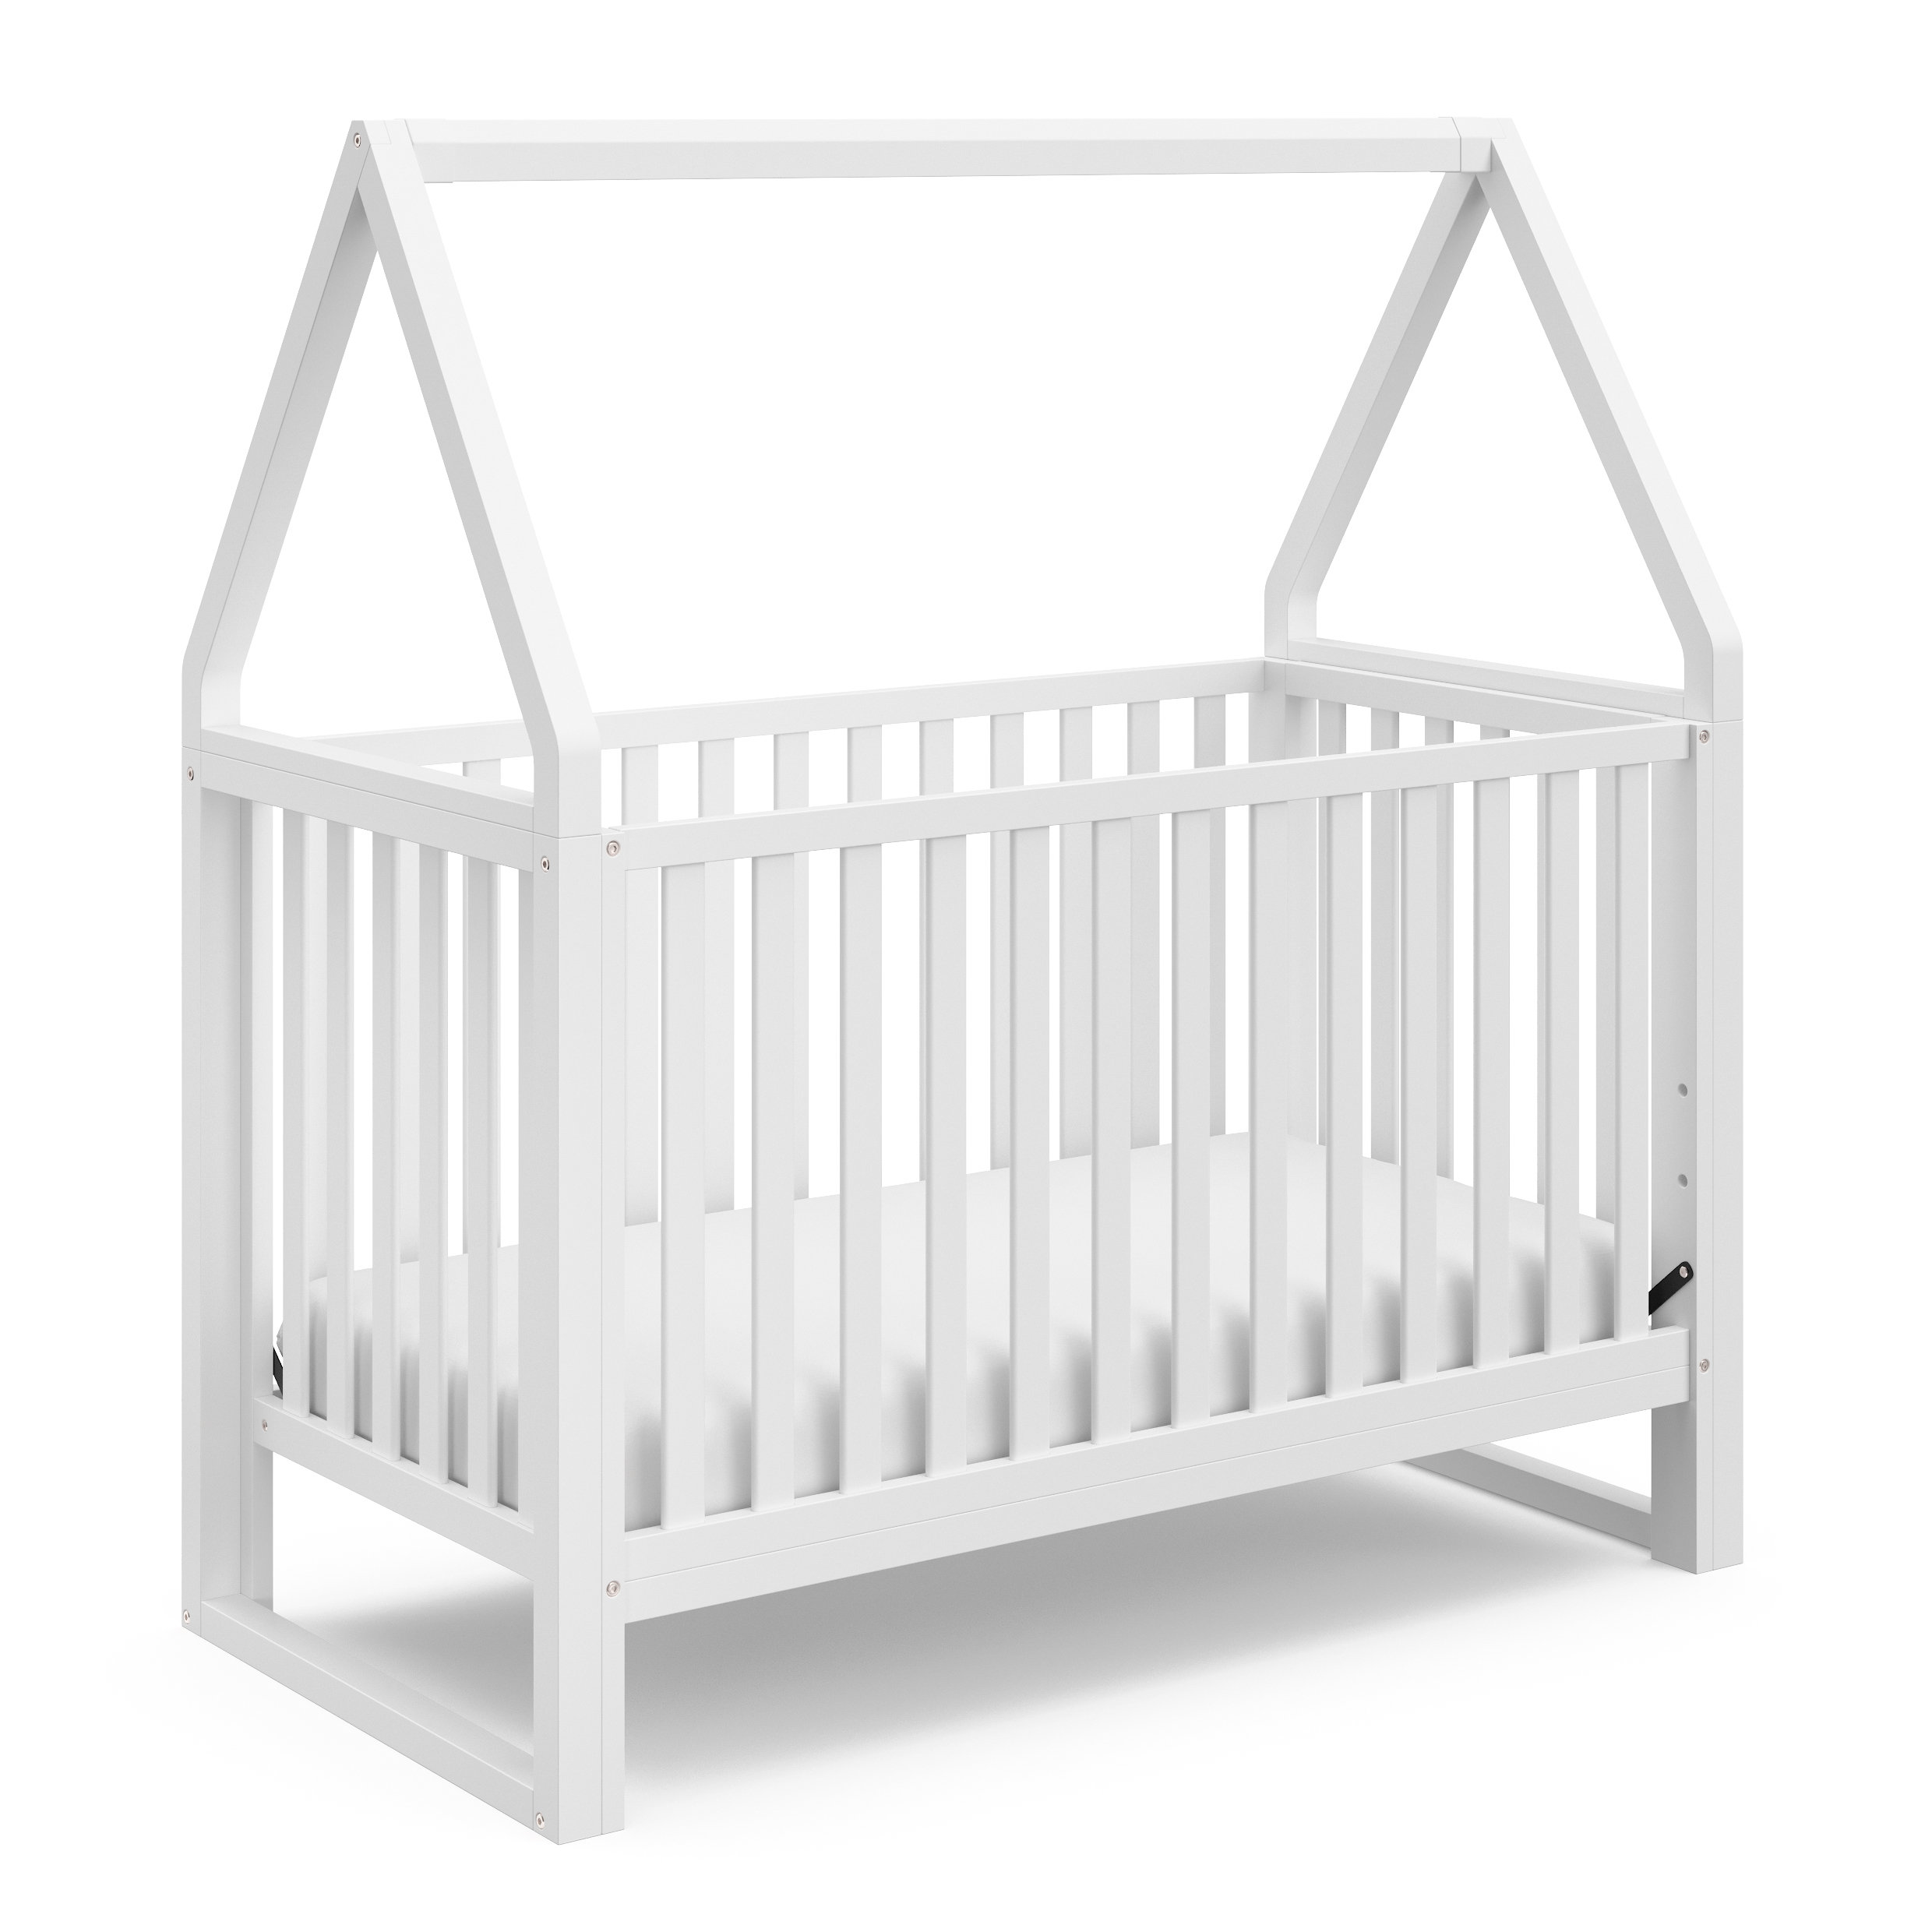 adjustable crib mattress support